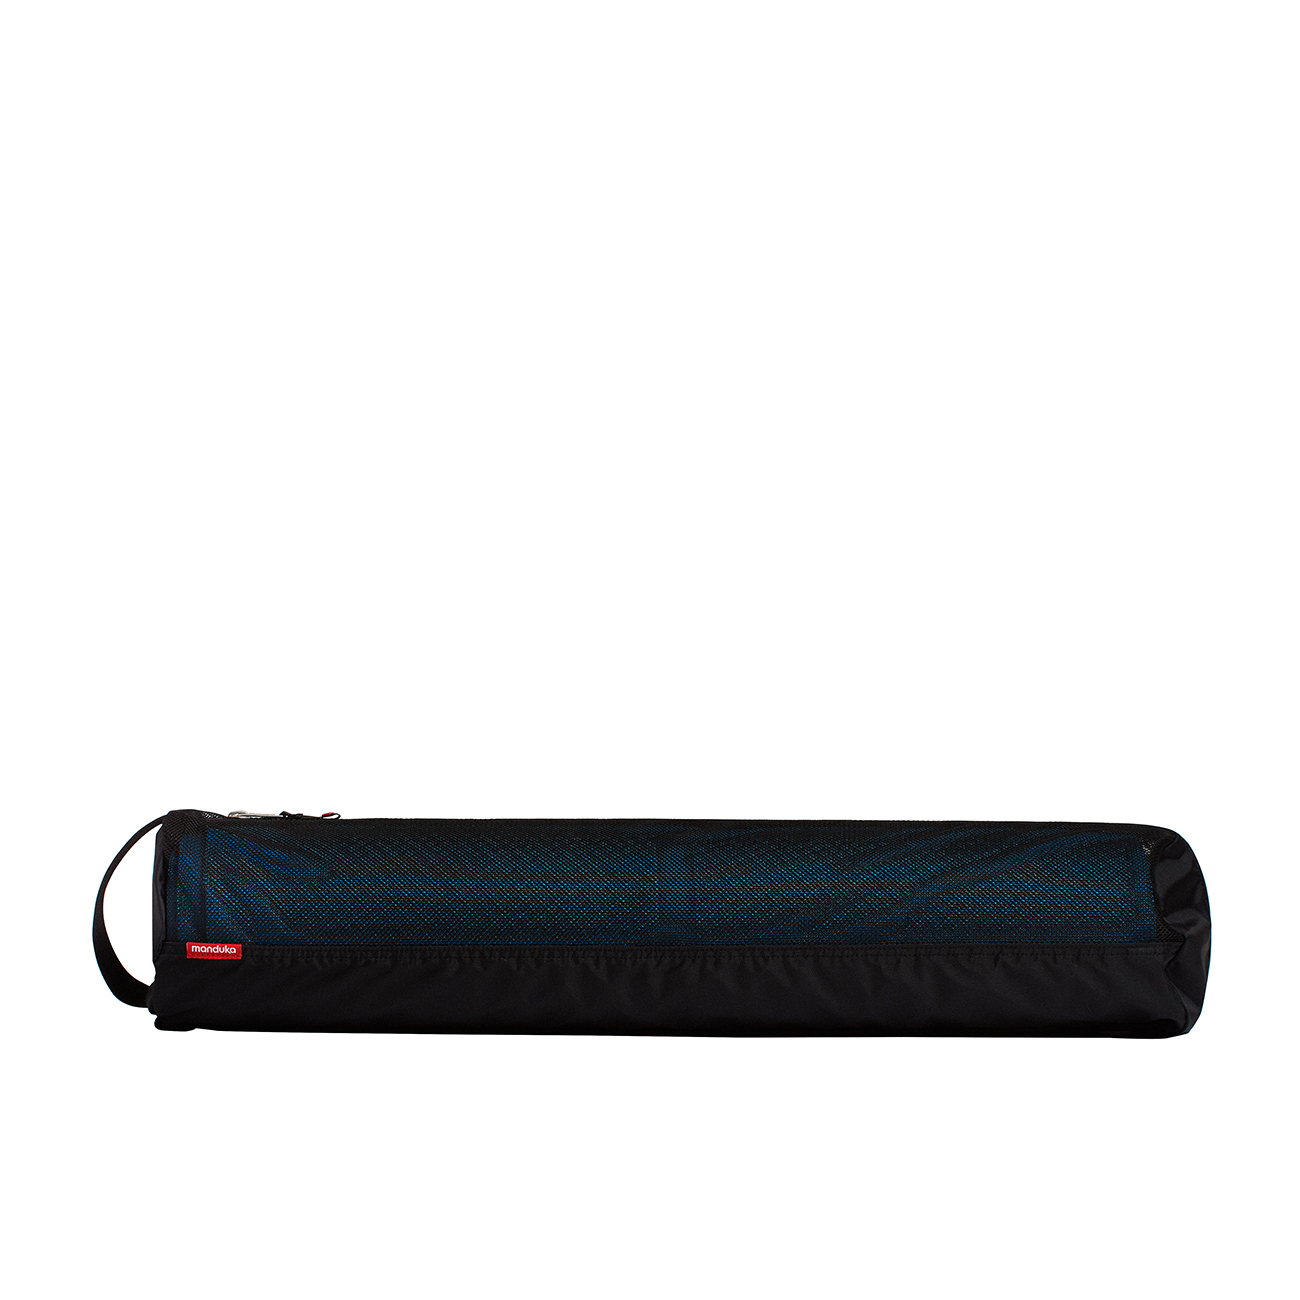 Yoga Bag Breathe Easy - Black, Bags for your yoga mat